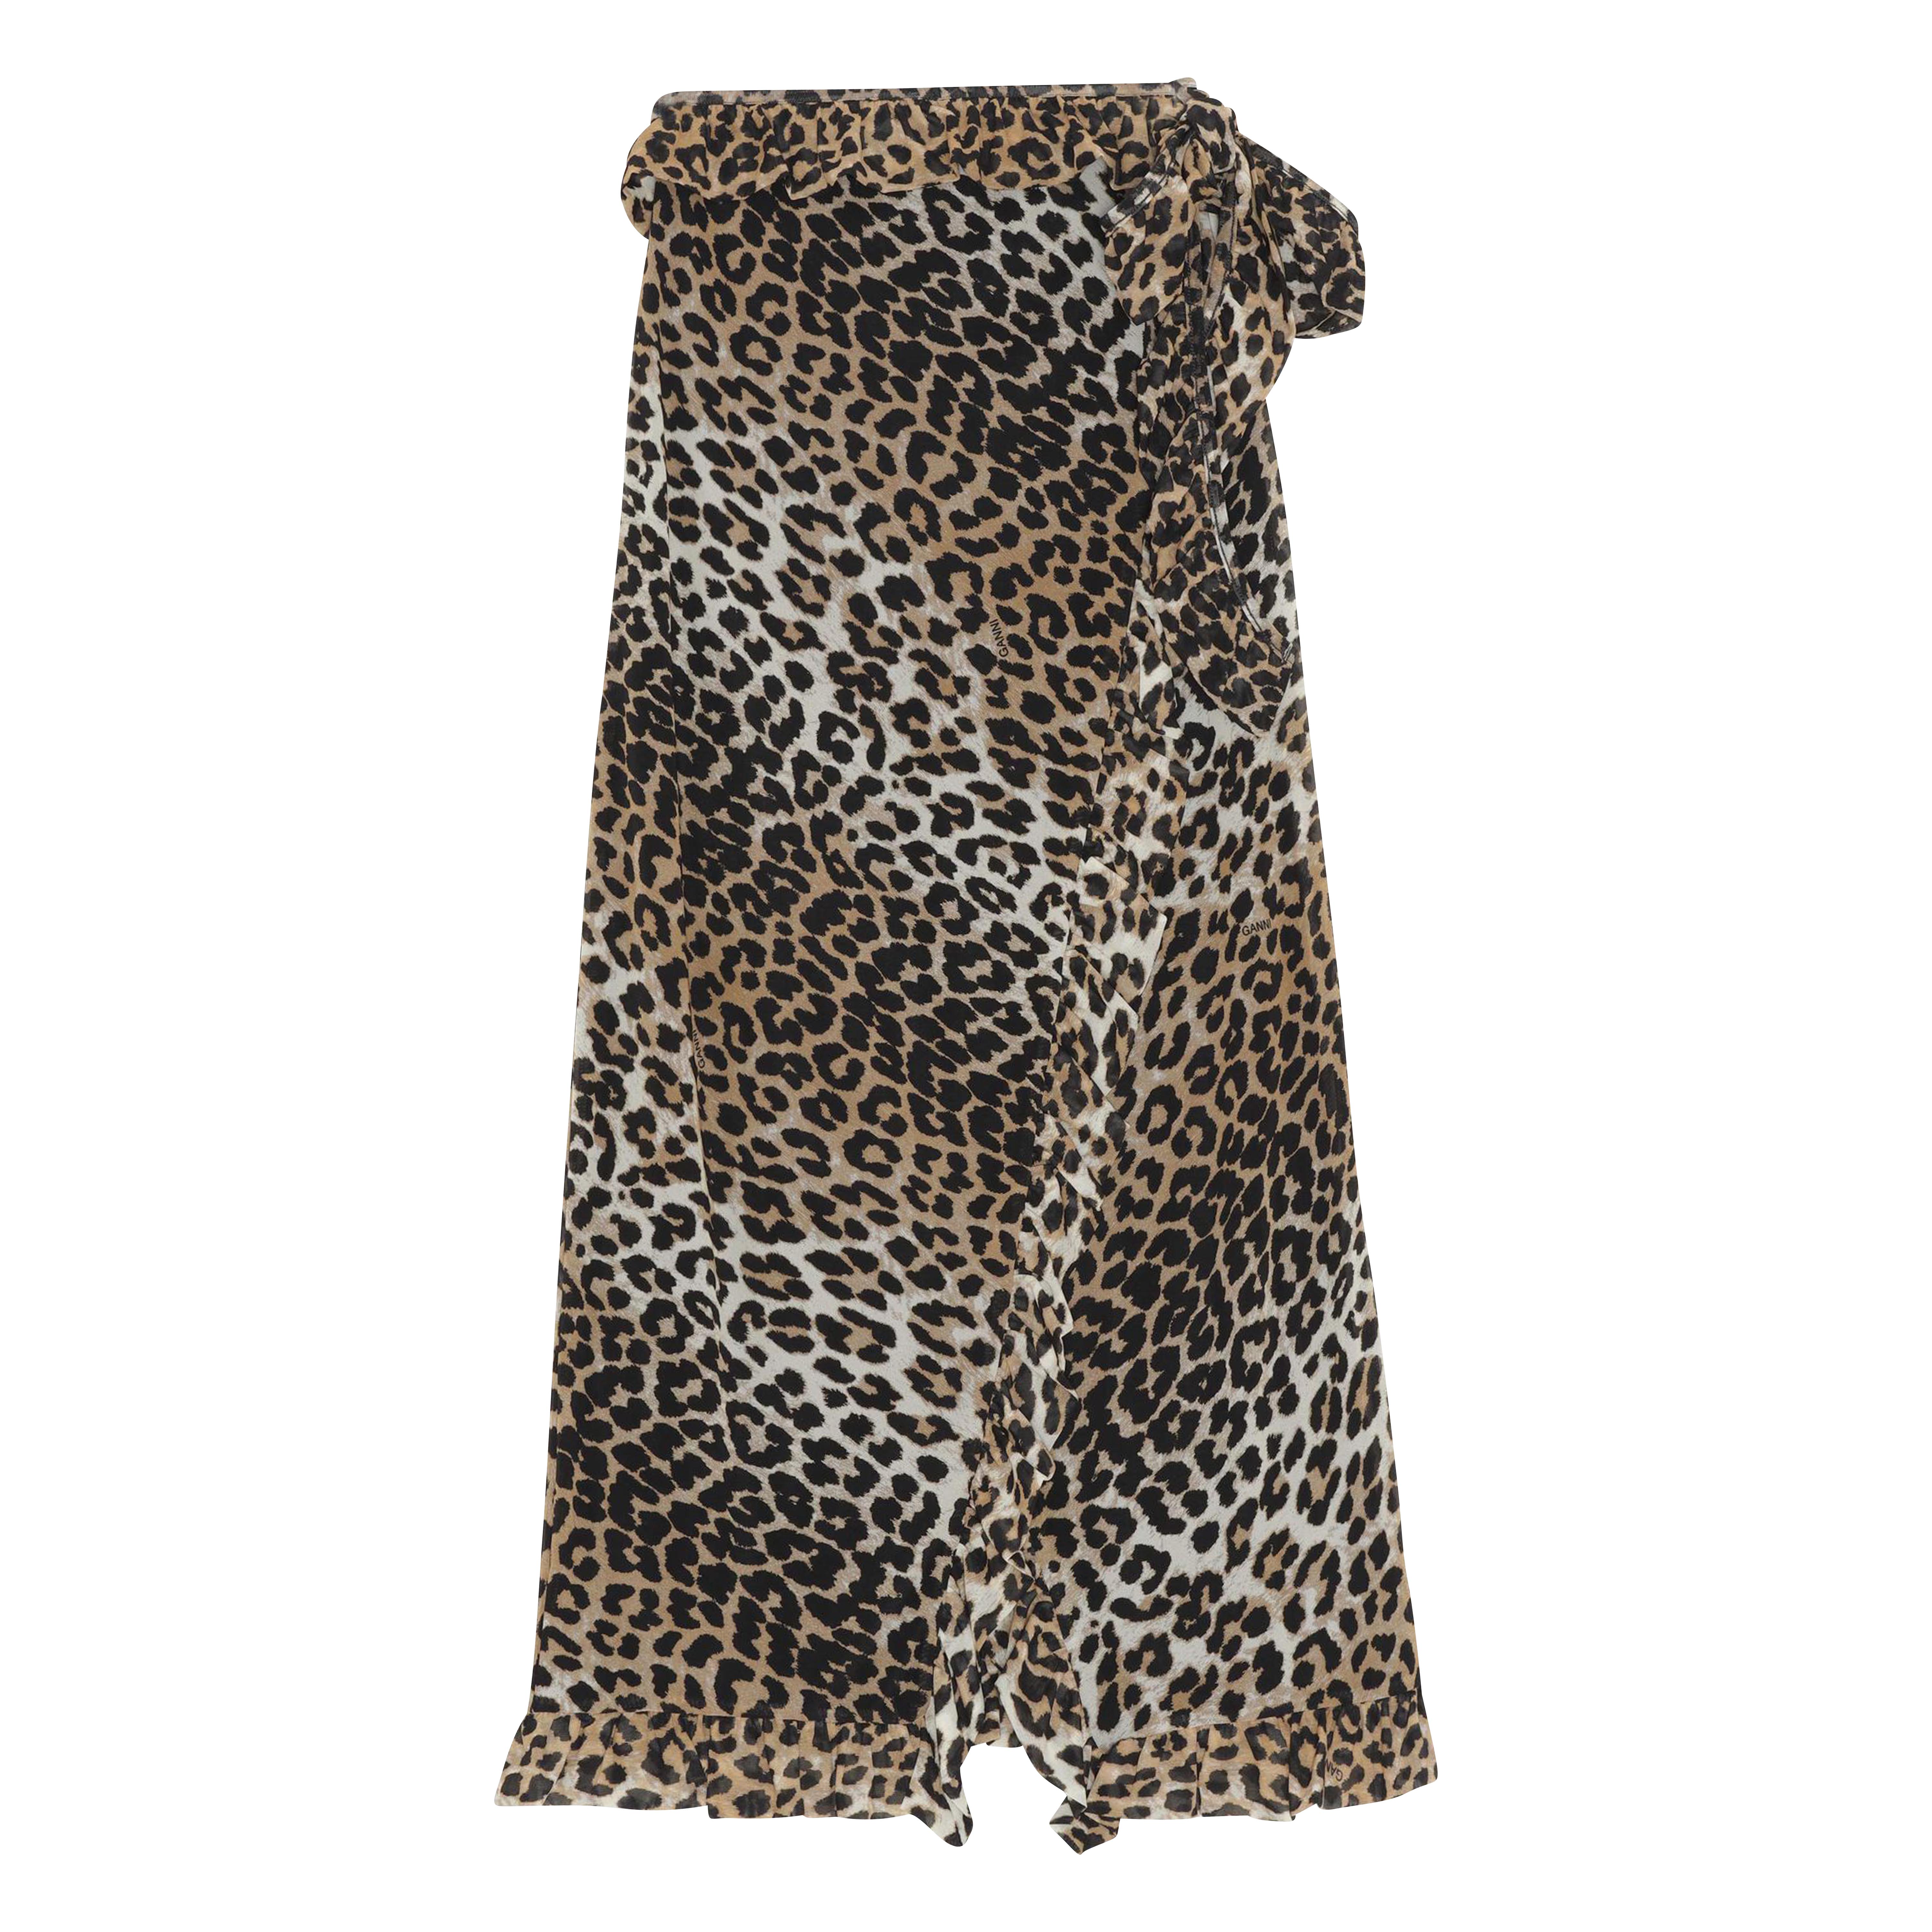 Ganni Printed Mesh Ruffle Midi Wrap Skirt in Leopard